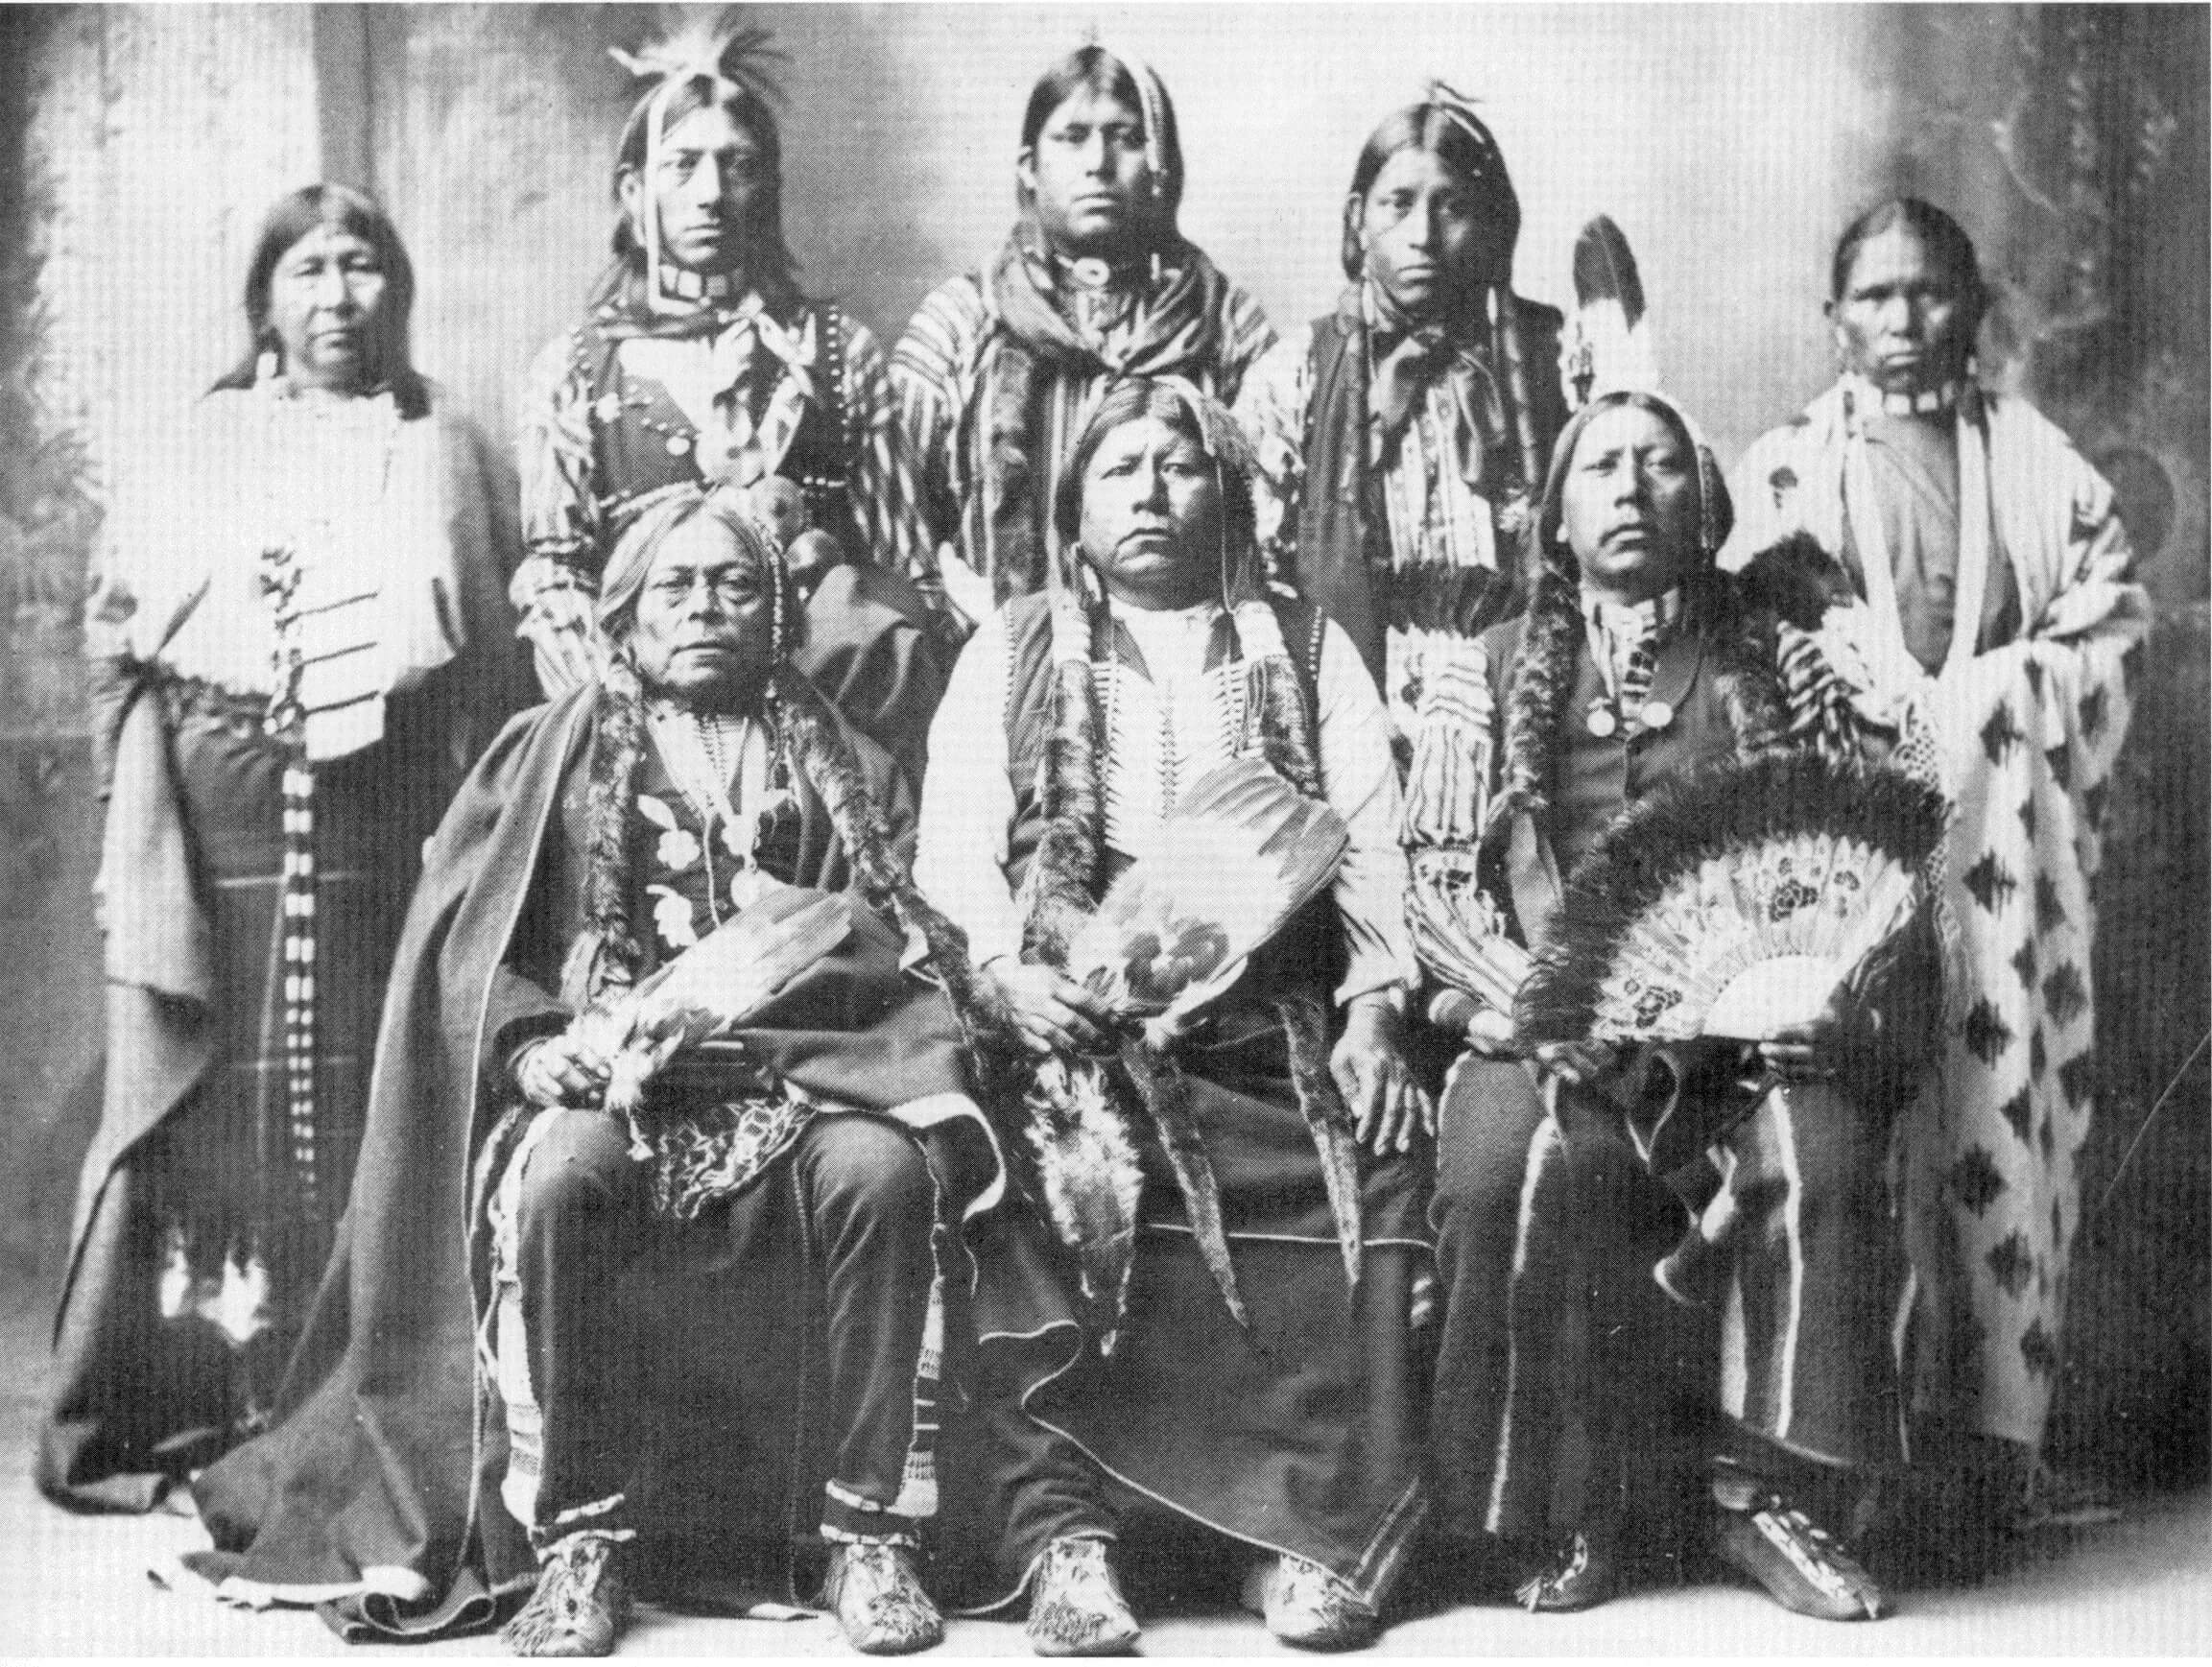 The Tonkawa Indians - City of Round Rock